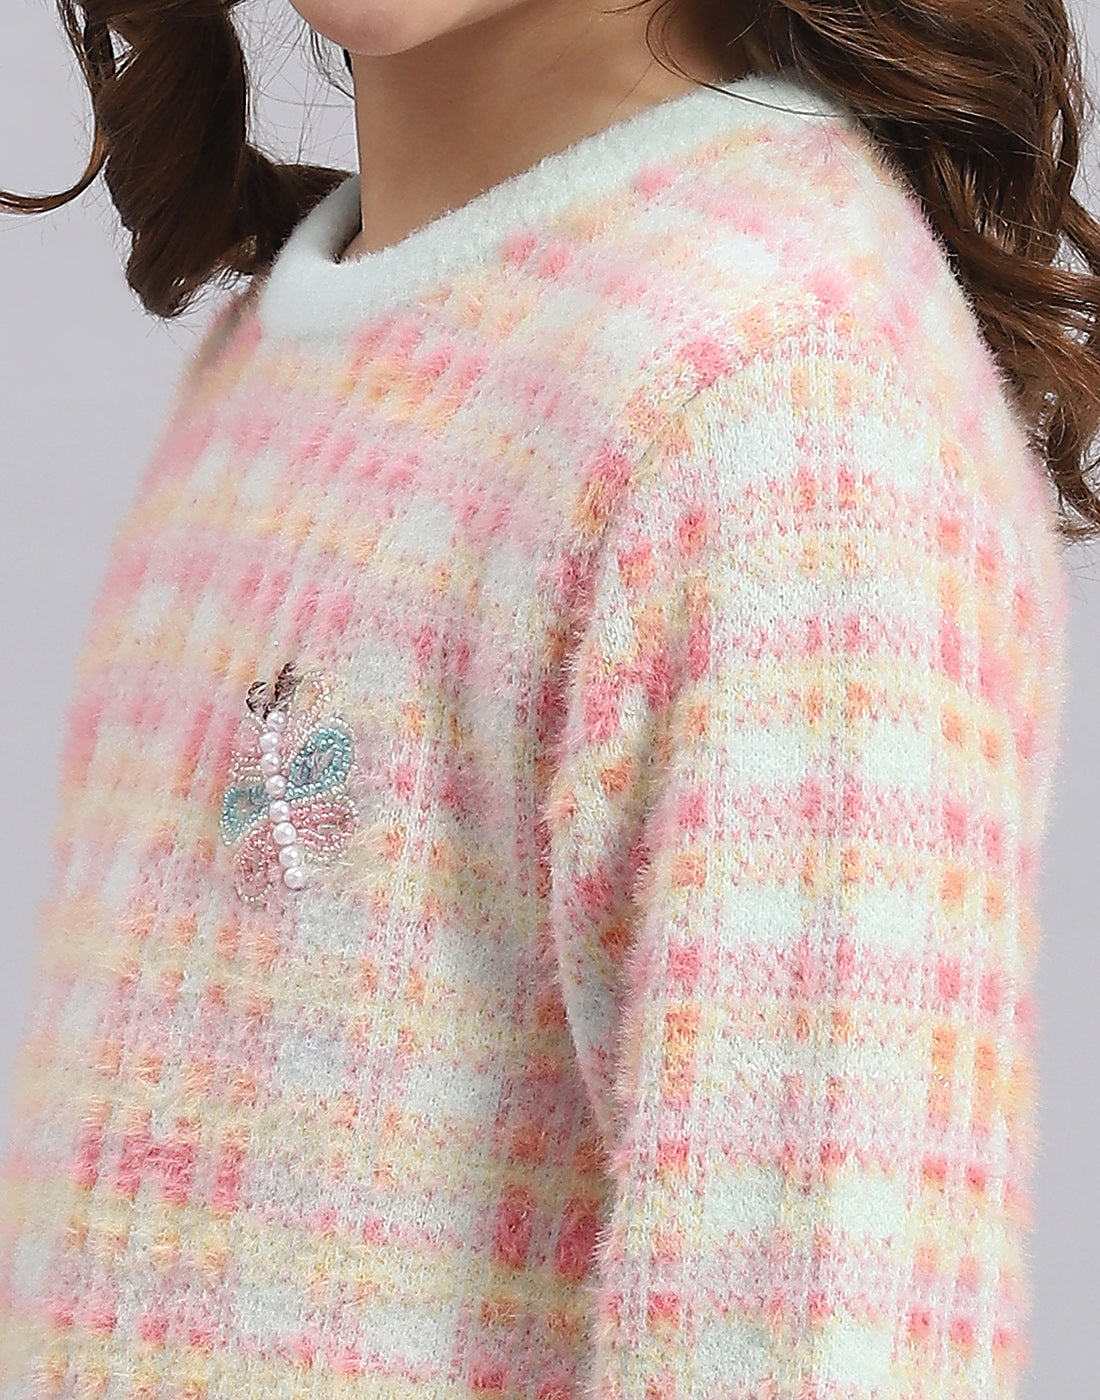 Girls Pink Self Design Round Neck Full Sleeve Sweater